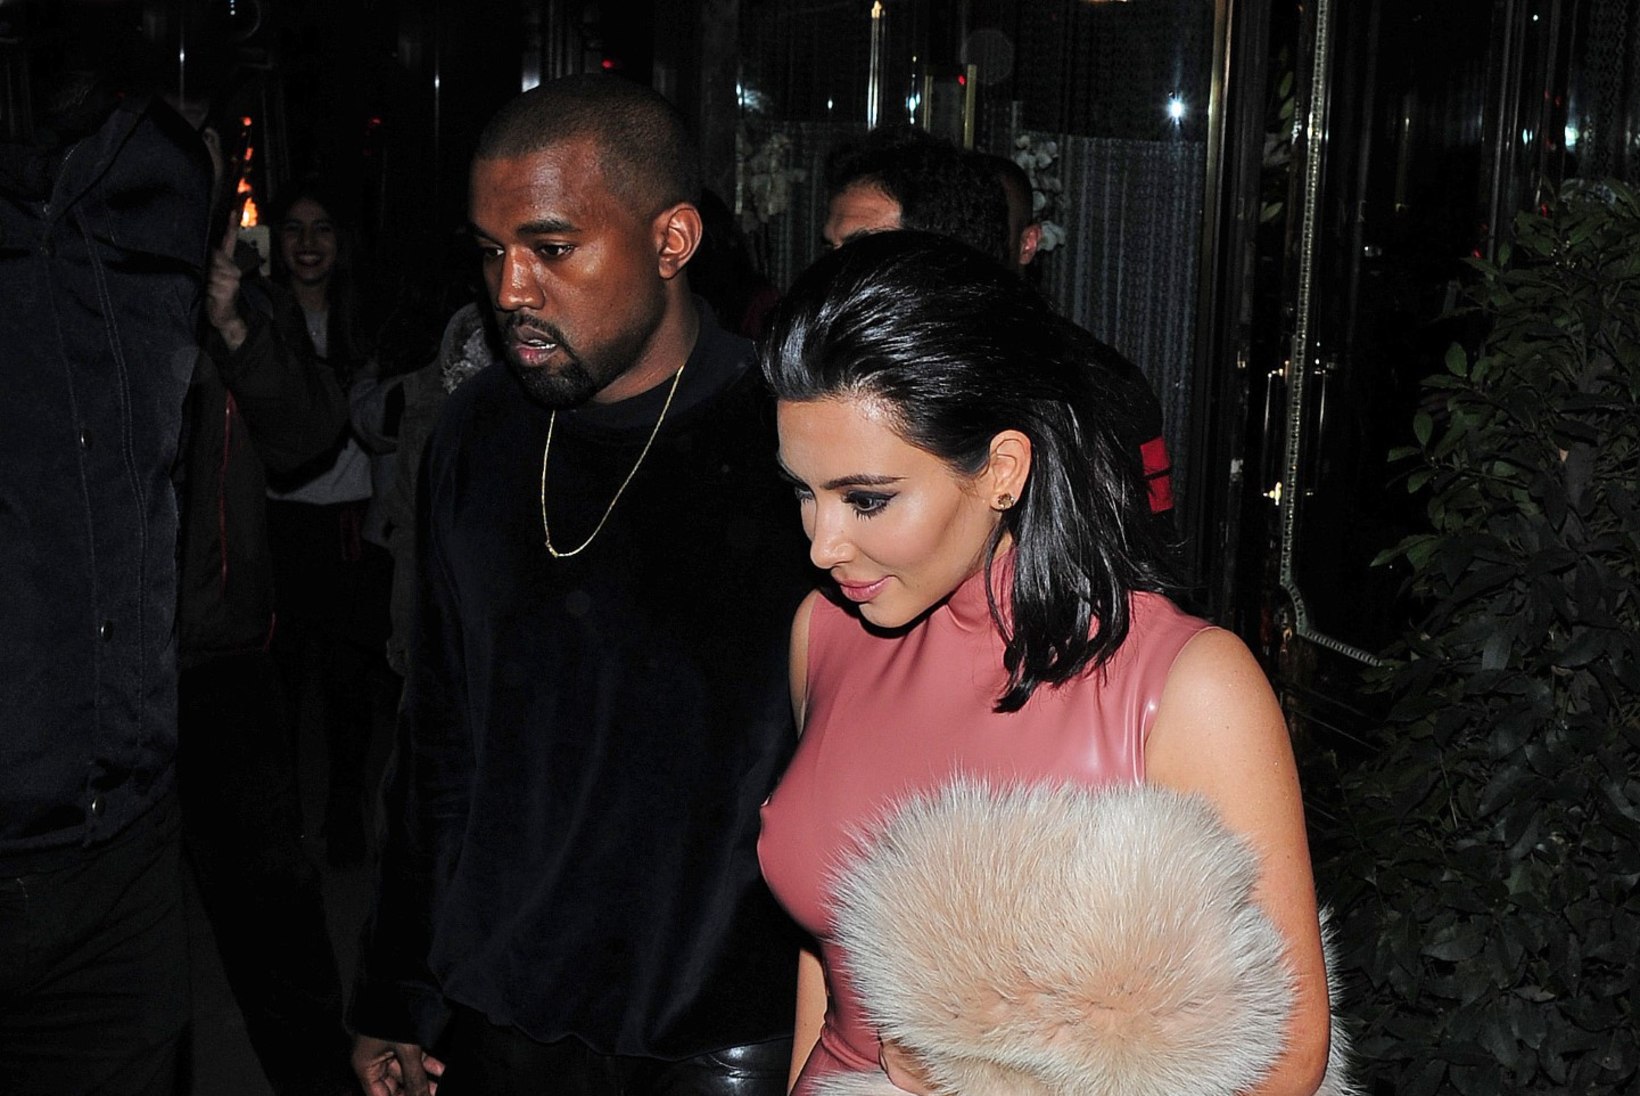 FOTOD: kas roosa latekskleidi kandis paremini välja Rita Ora või Kim Kardashian?